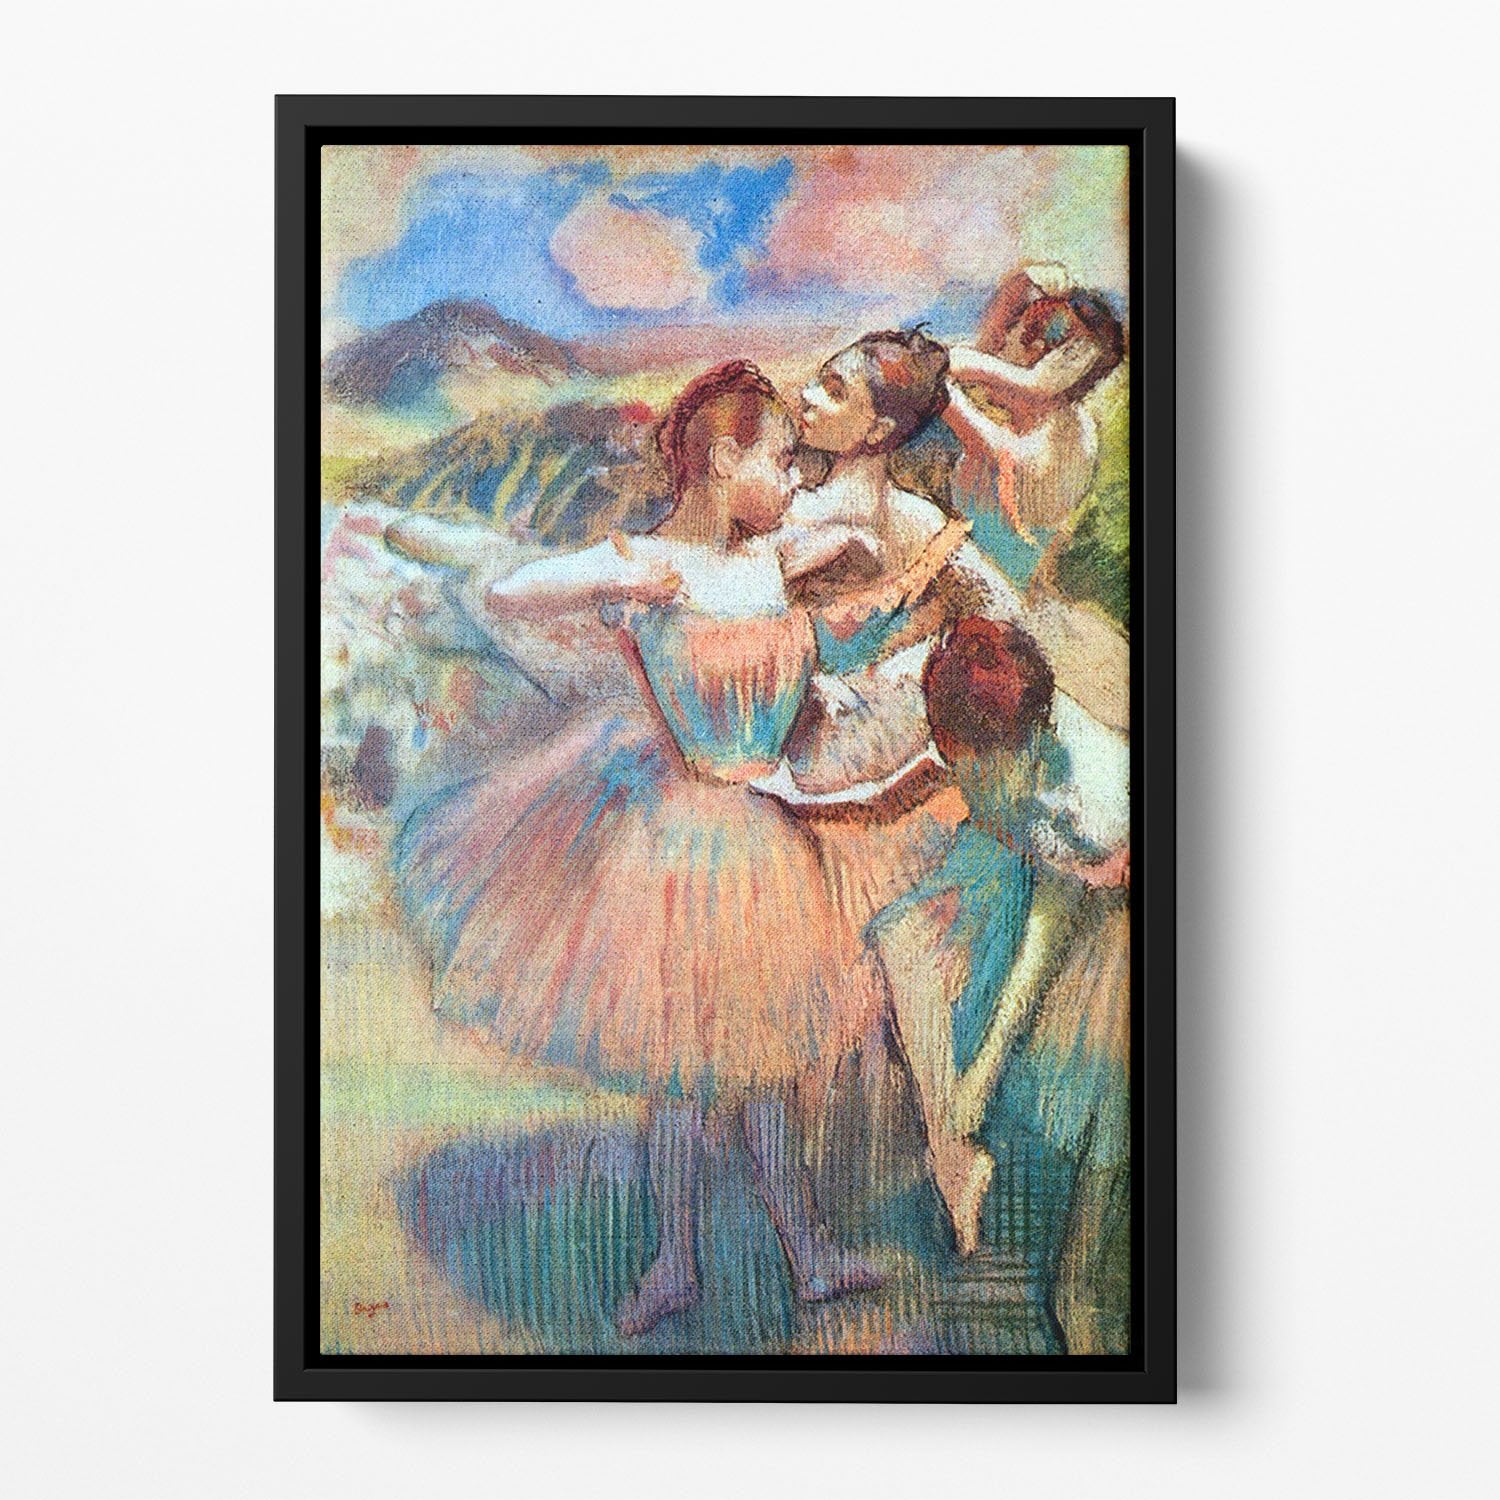 Dancers in the landscape by Degas Floating Framed Canvas